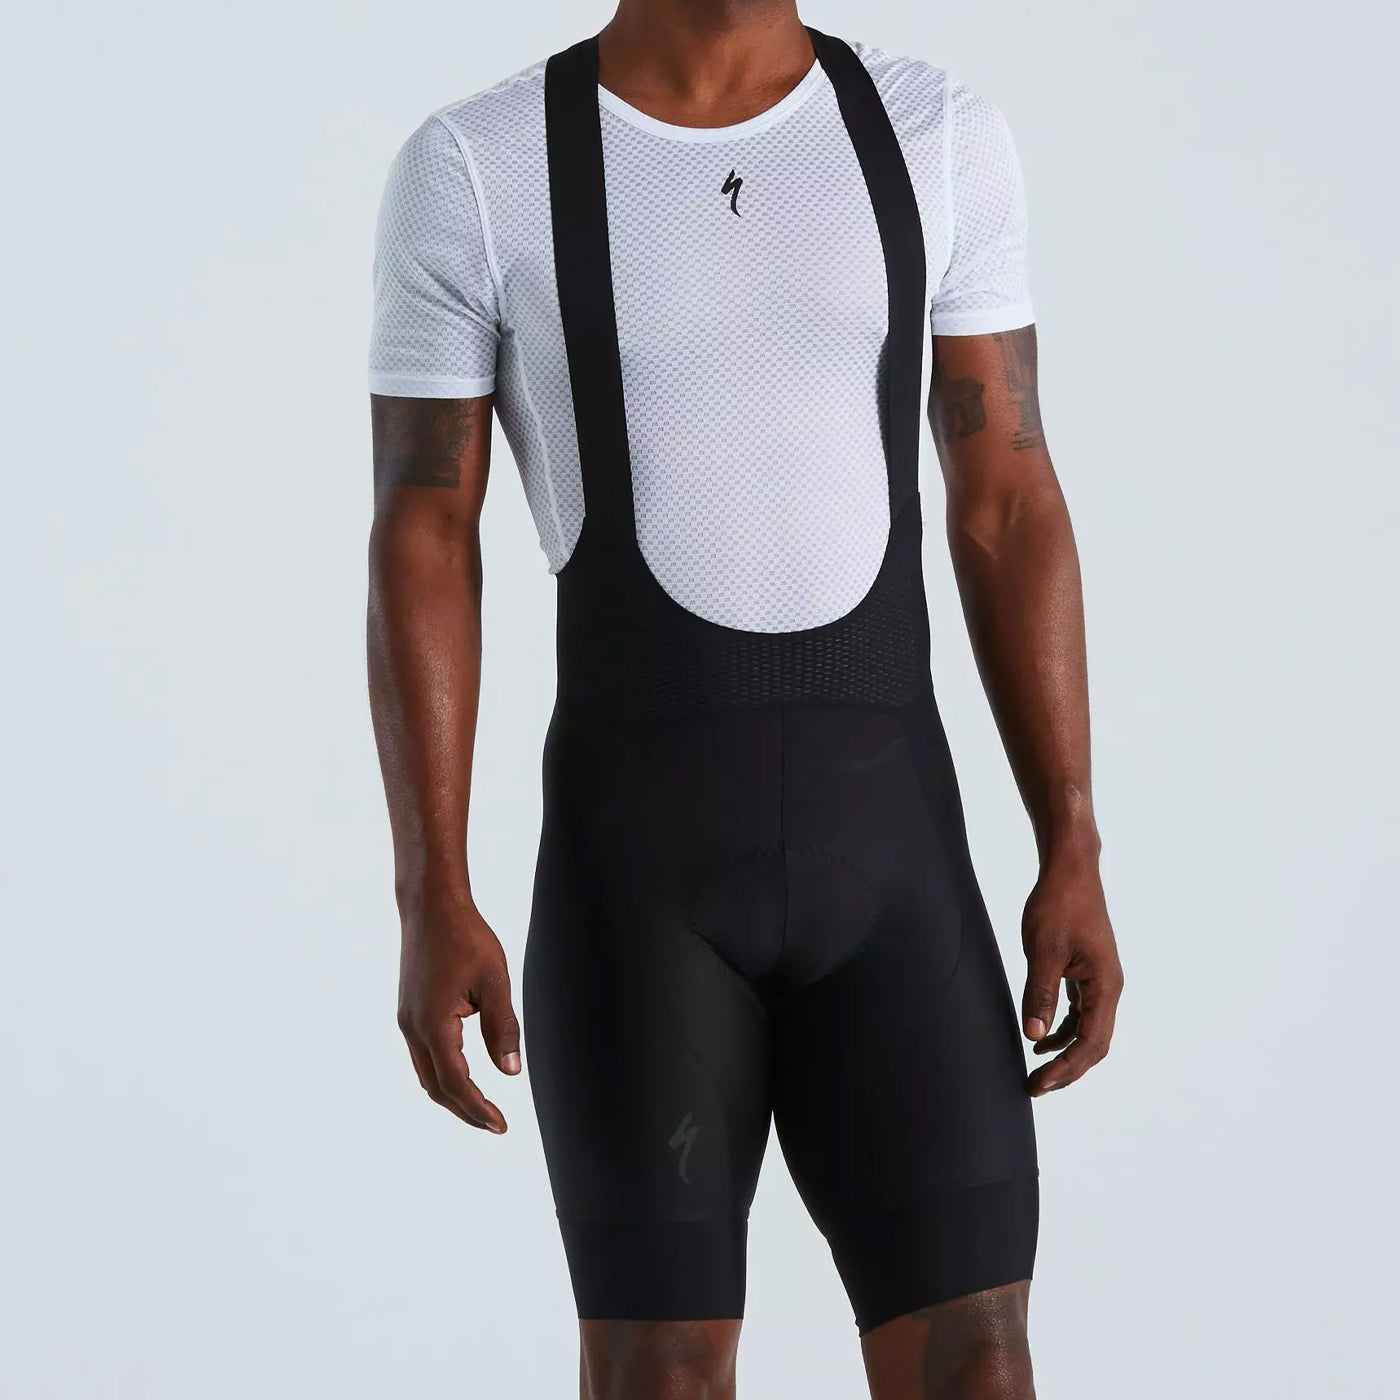 Specialized SL Race bib shorts - Black